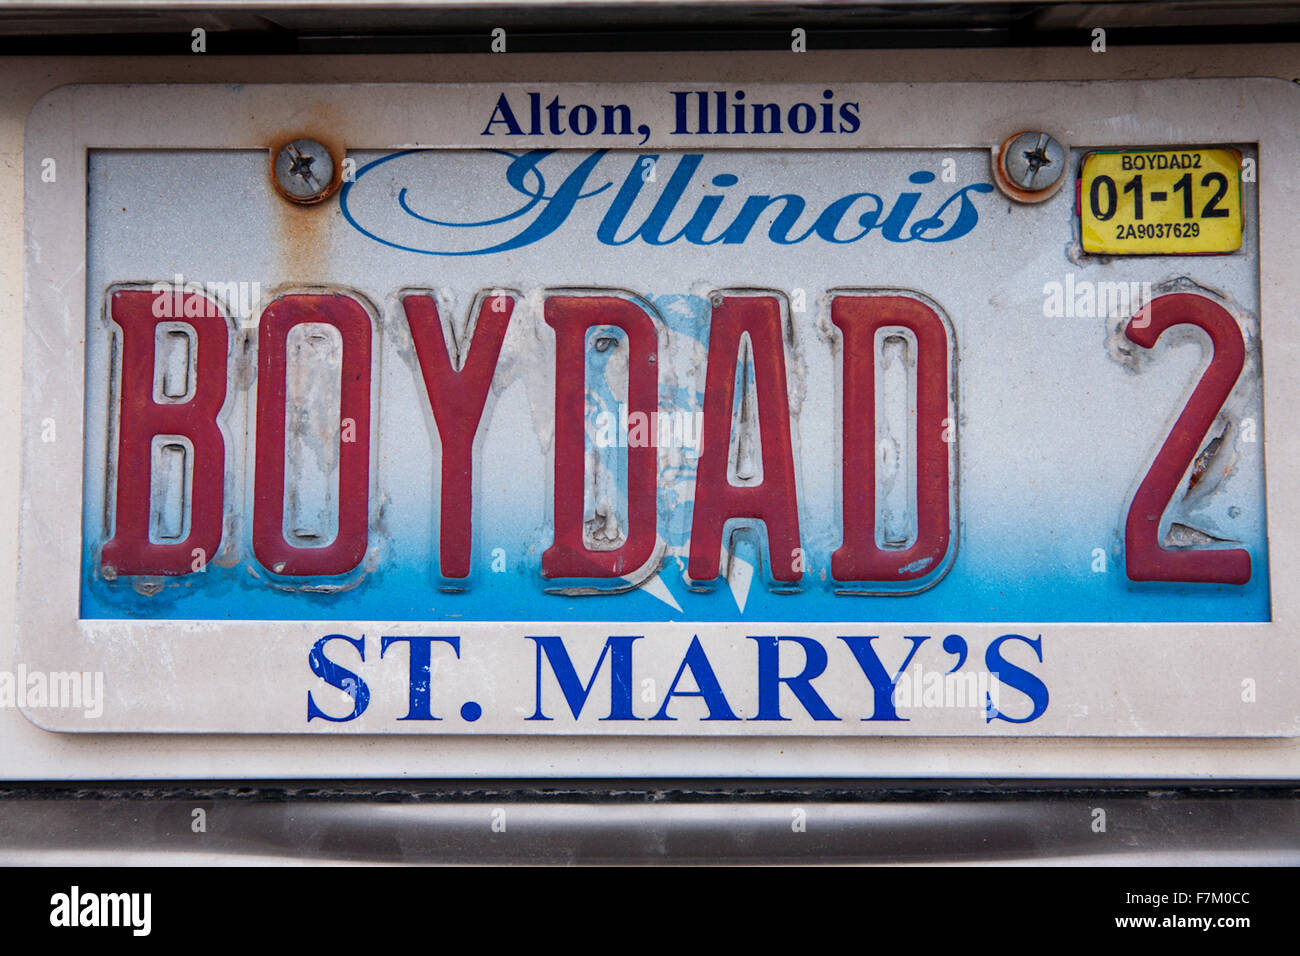 Illinois-Kfz-Kennzeichen lautet BOYDAD2 Stockfoto